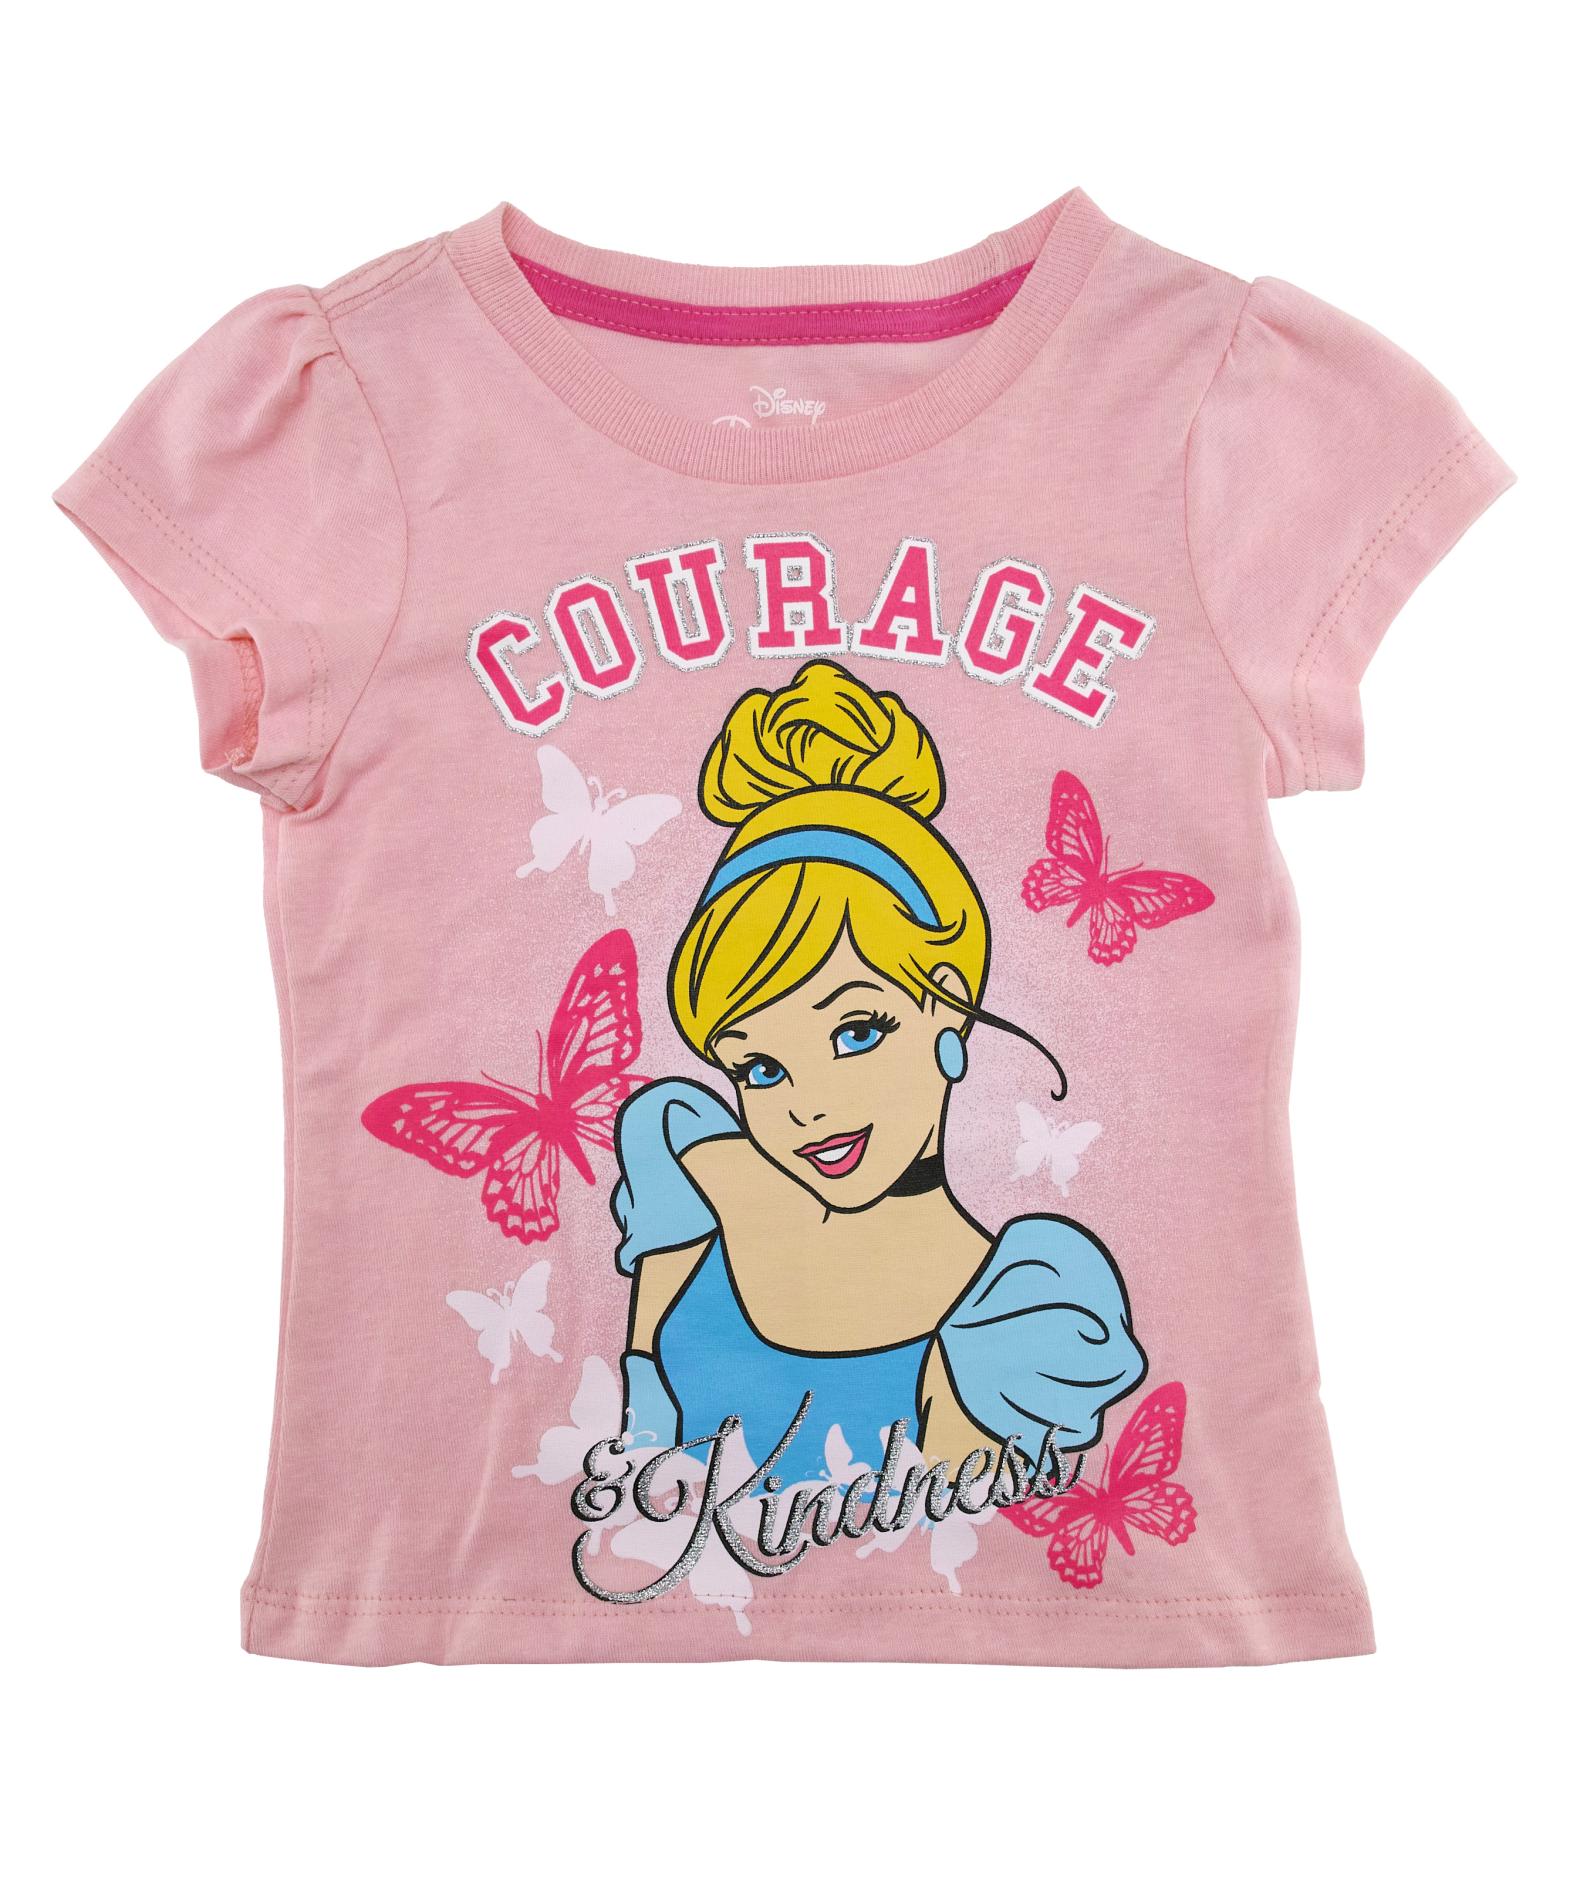 Disney Cinderella Toddler Girl's Graphic T-Shirt - Courage & Kindness